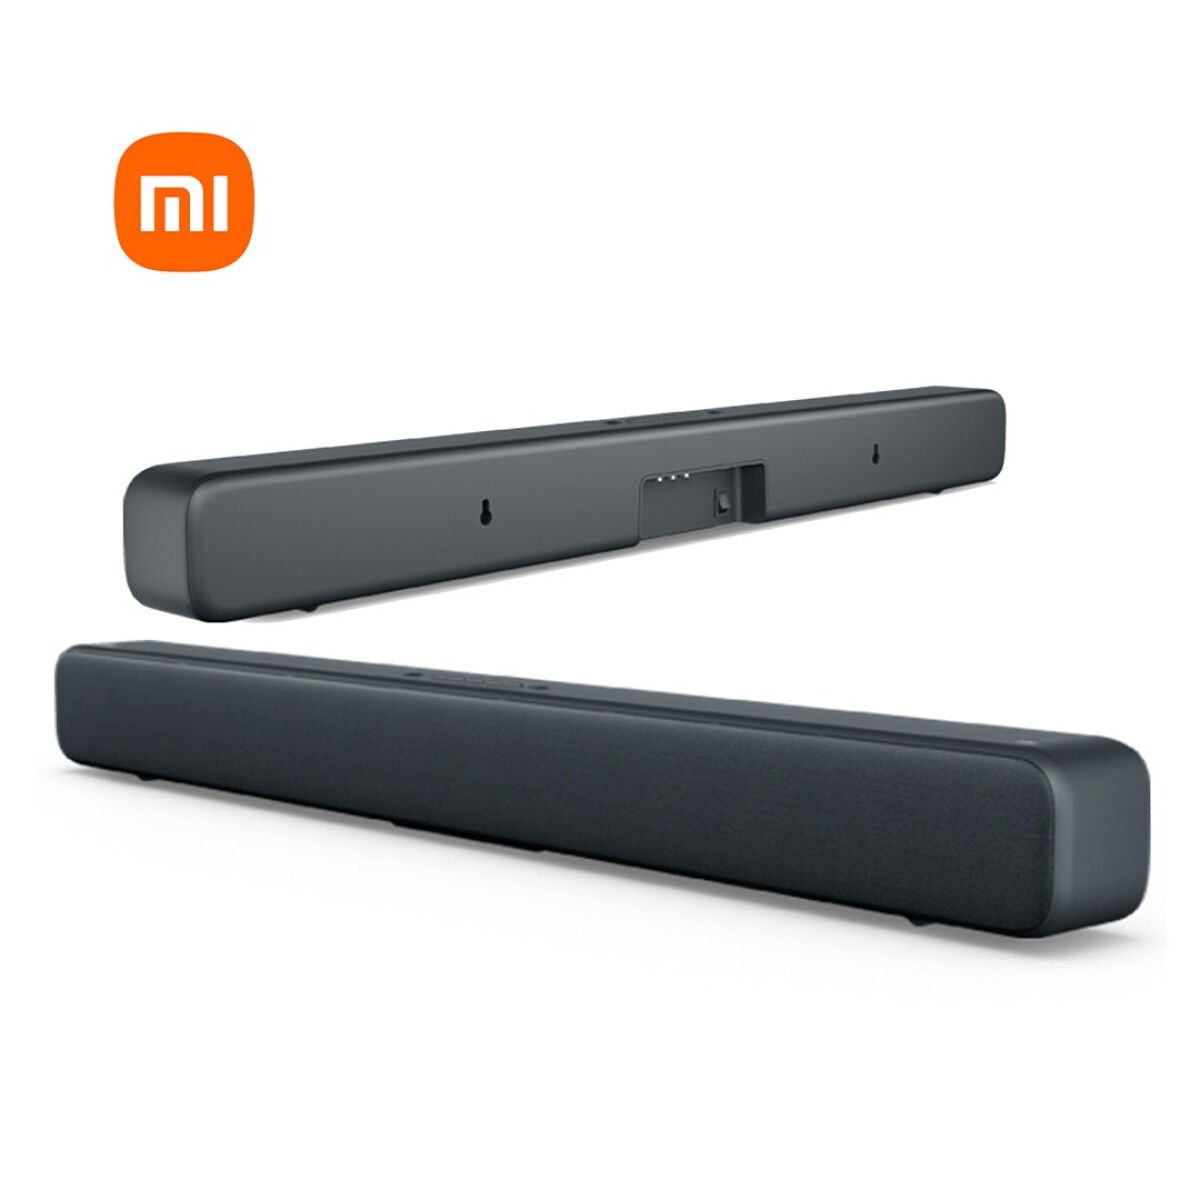 Barra de Sonido para Tv Xiaomi Mi Sound Bar - 001 